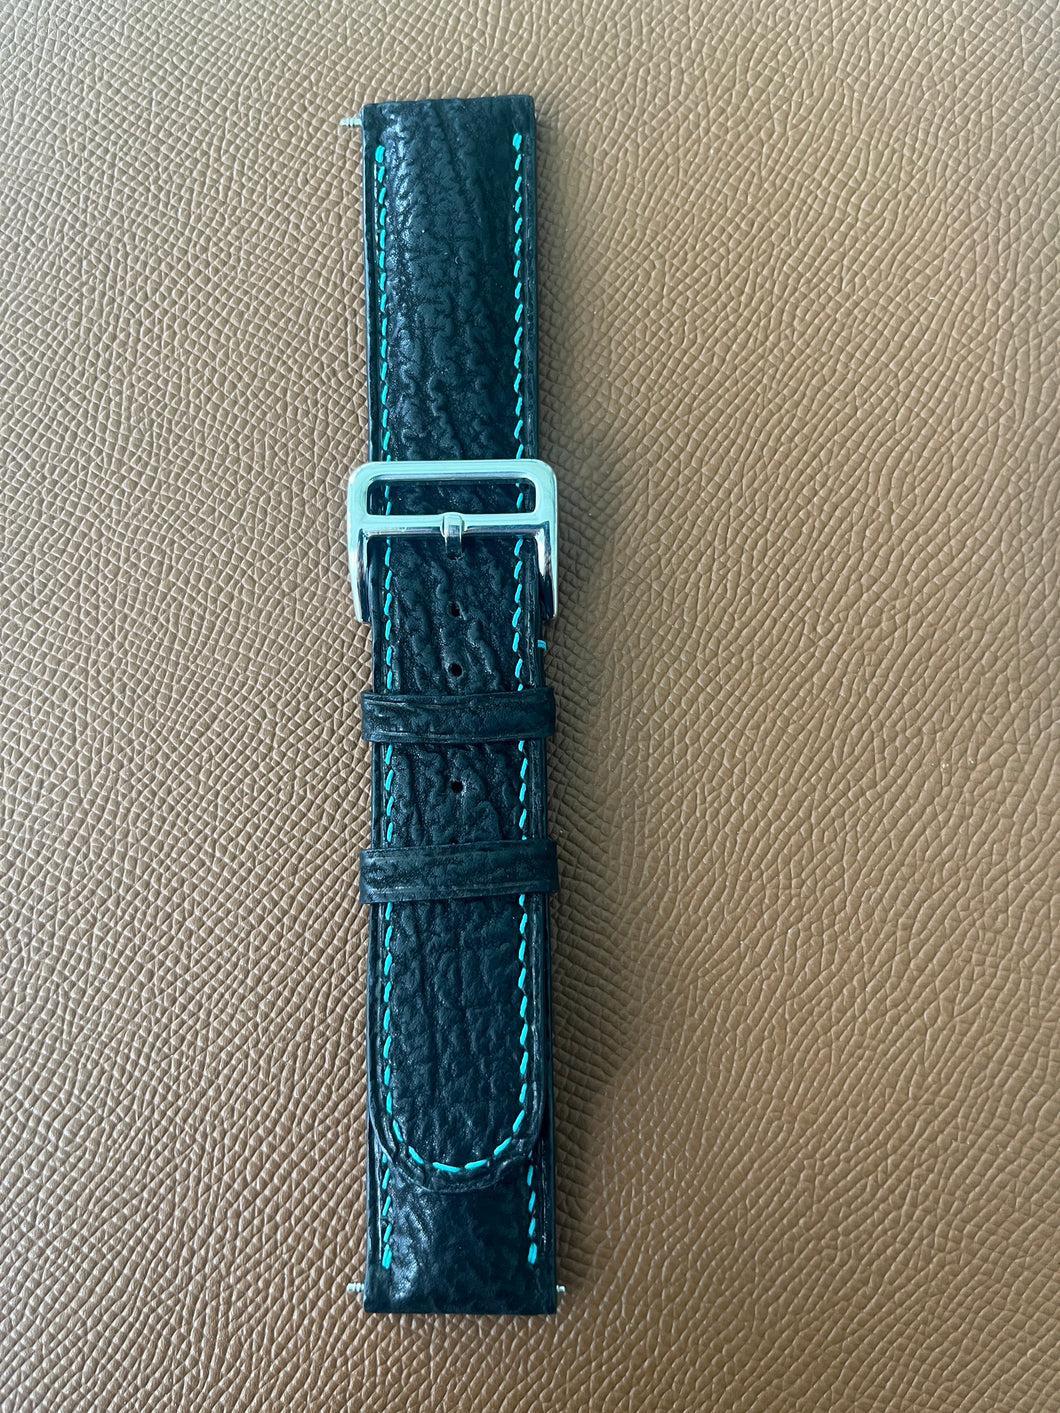 Shark Skin Watch Straps - Black Leather - Blue stitch - 22mm